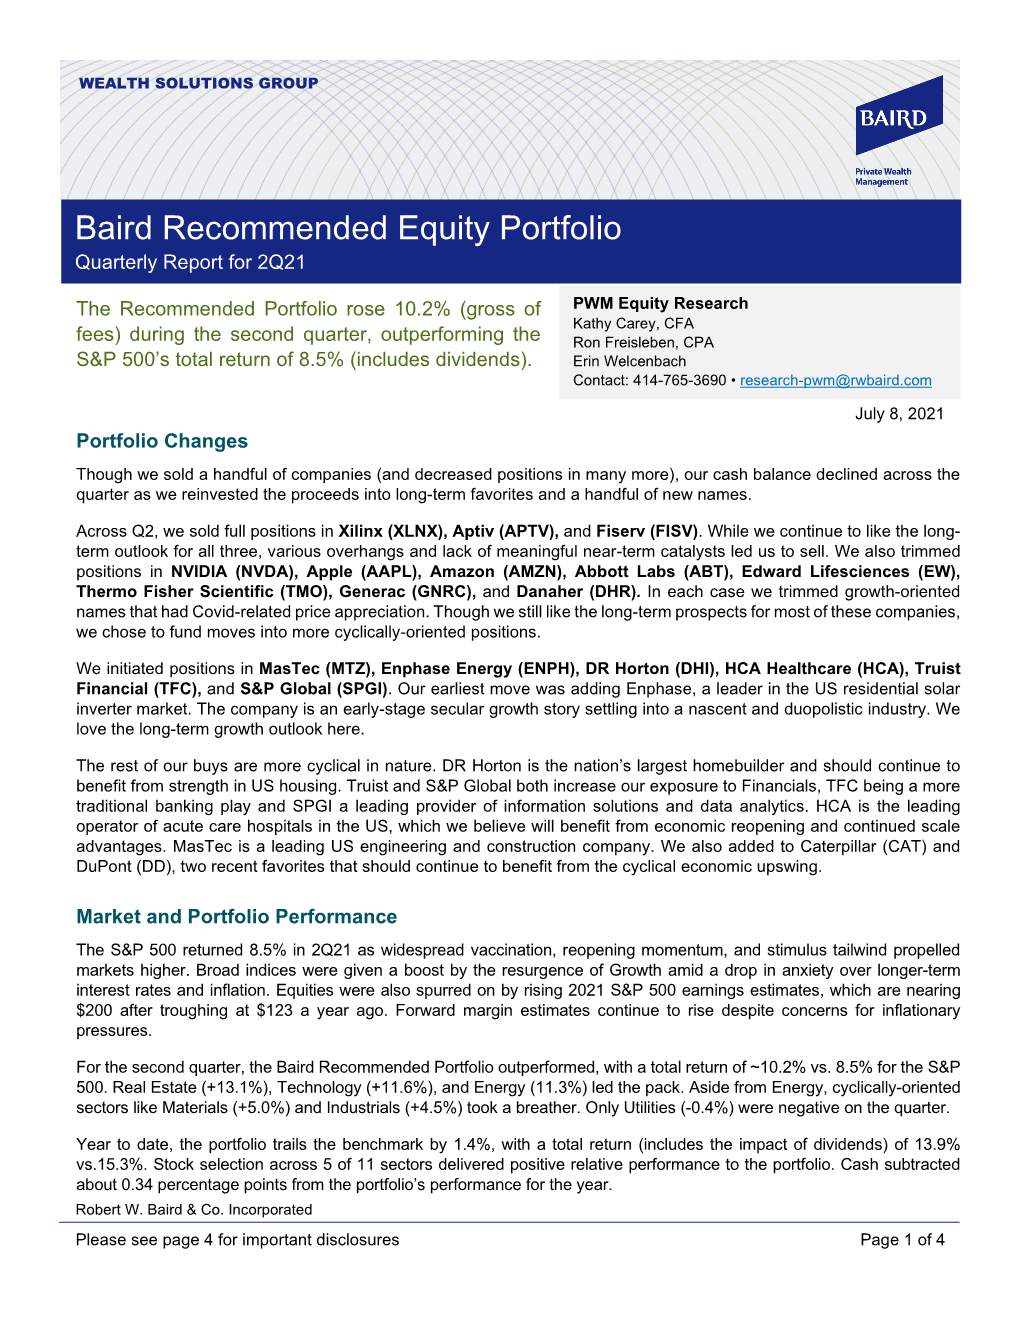 Baird Recommended Equity Portfolio Quarterly Report for 2Q21